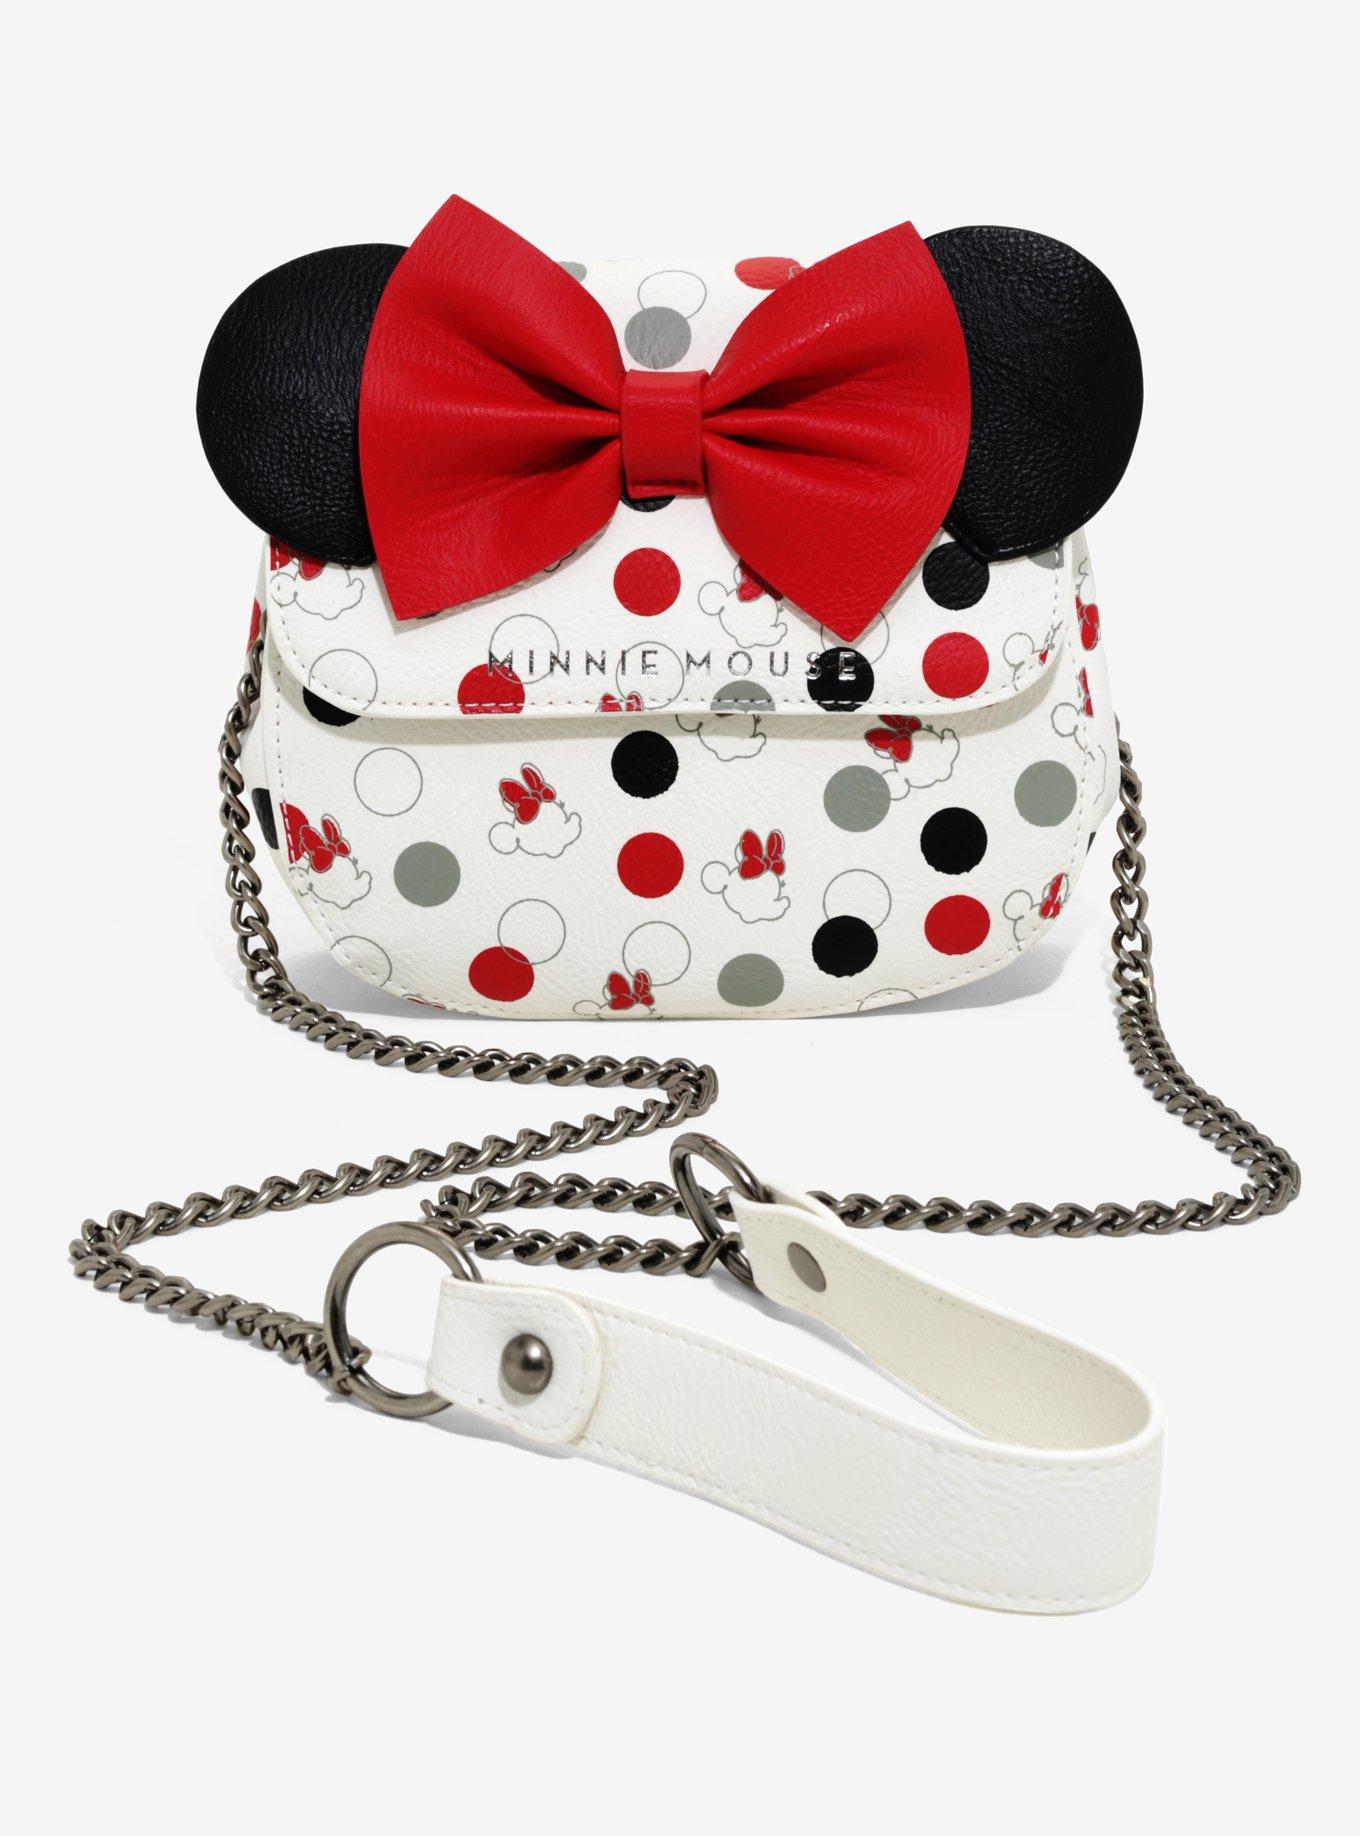 Disney Minnie Ears & Bow Crossbody Bag by Loungefly